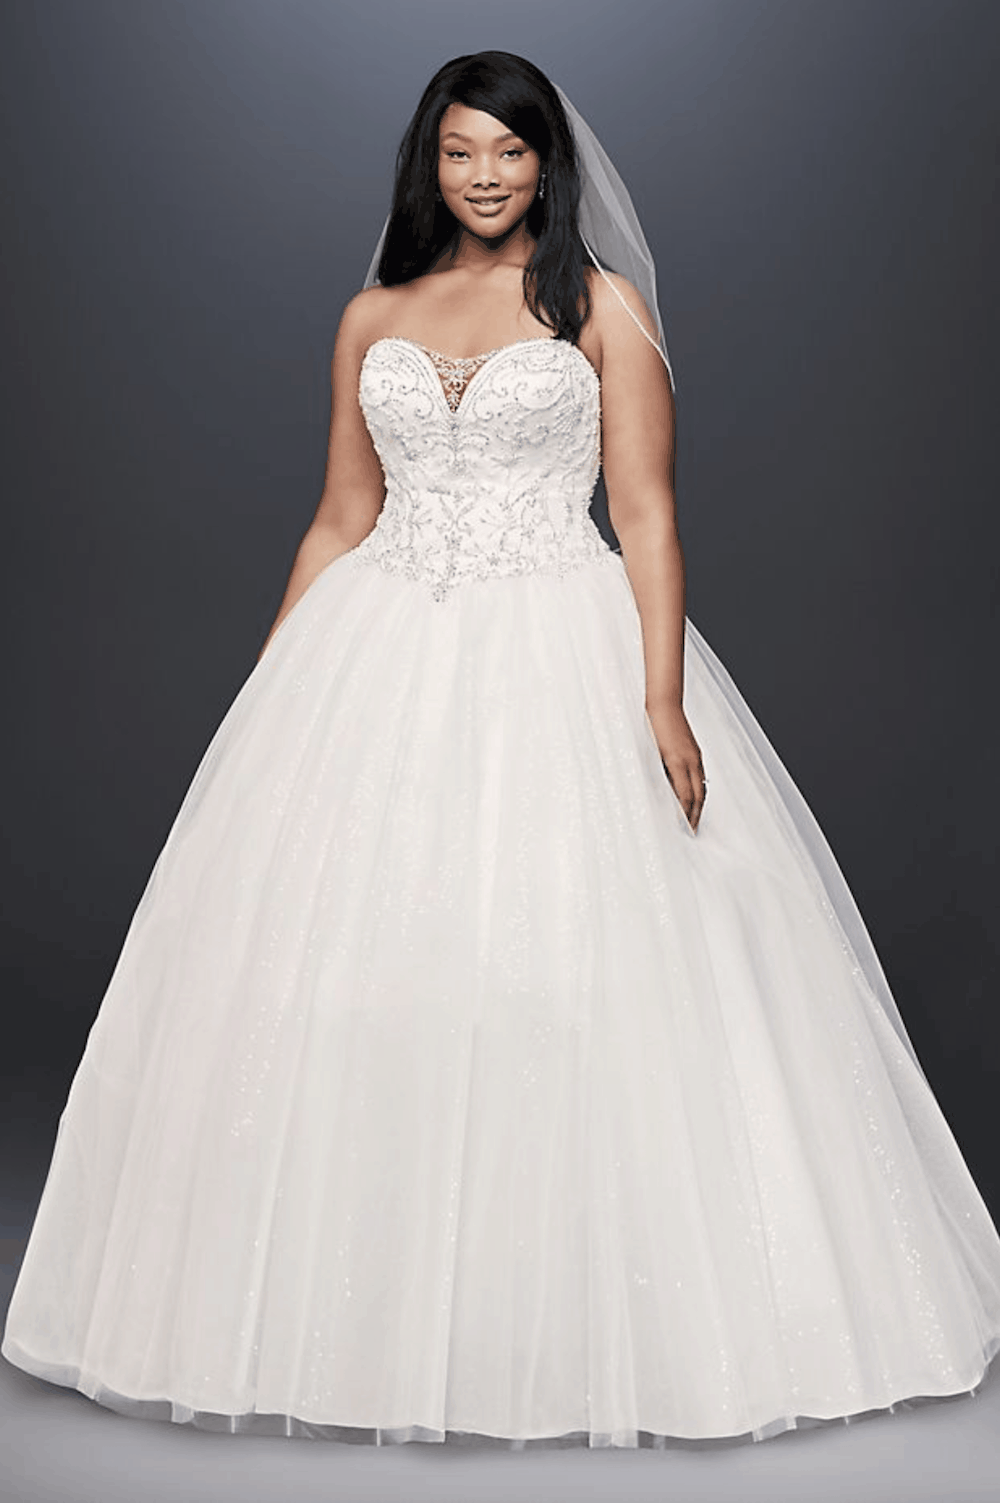 Disney Theme Plus Size Bridal Gowns Fairy Tale Hand-Beaded Illusion Plus Size Wedding Dress Simple